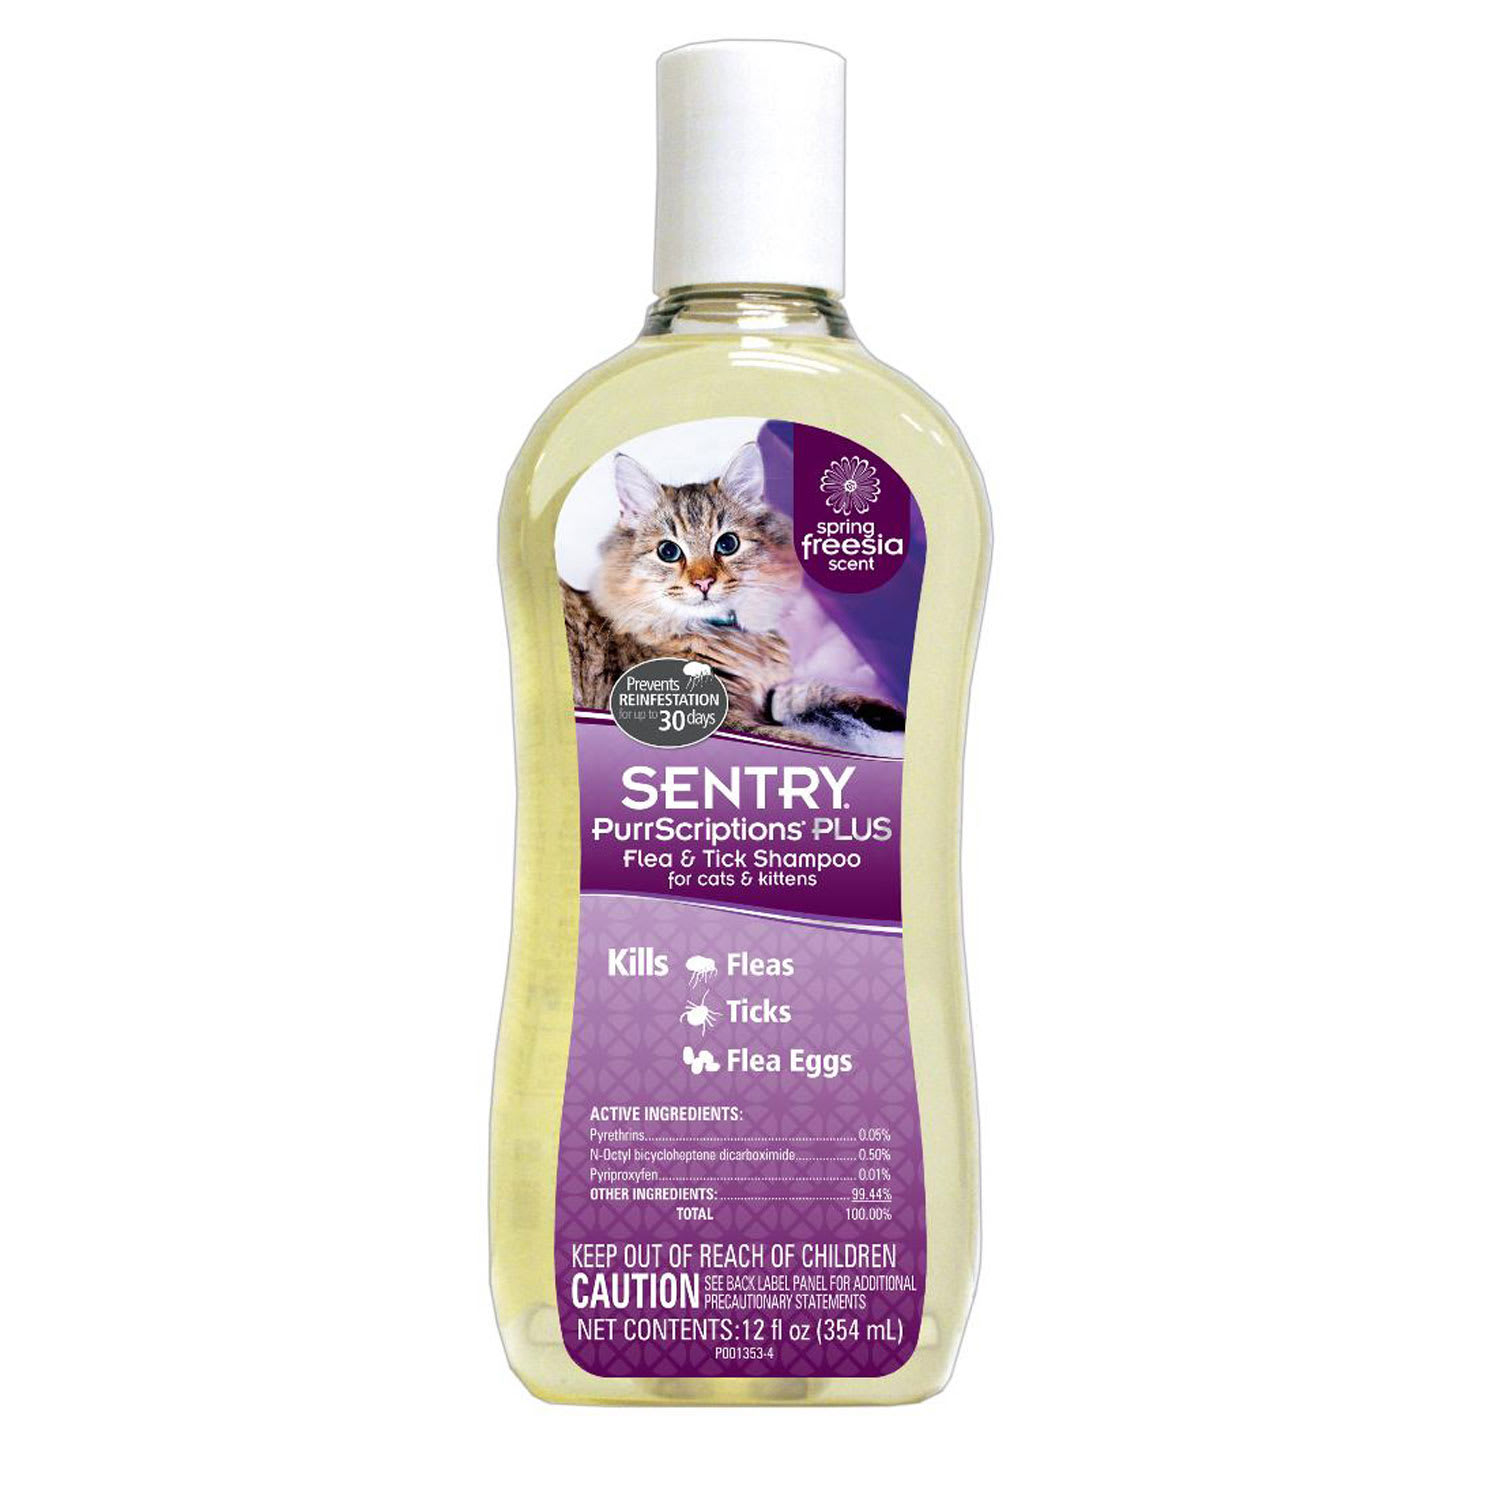 Sentry PurrScriptions Plus Flea & Tick Shampoo for Cats & Kittens Petco